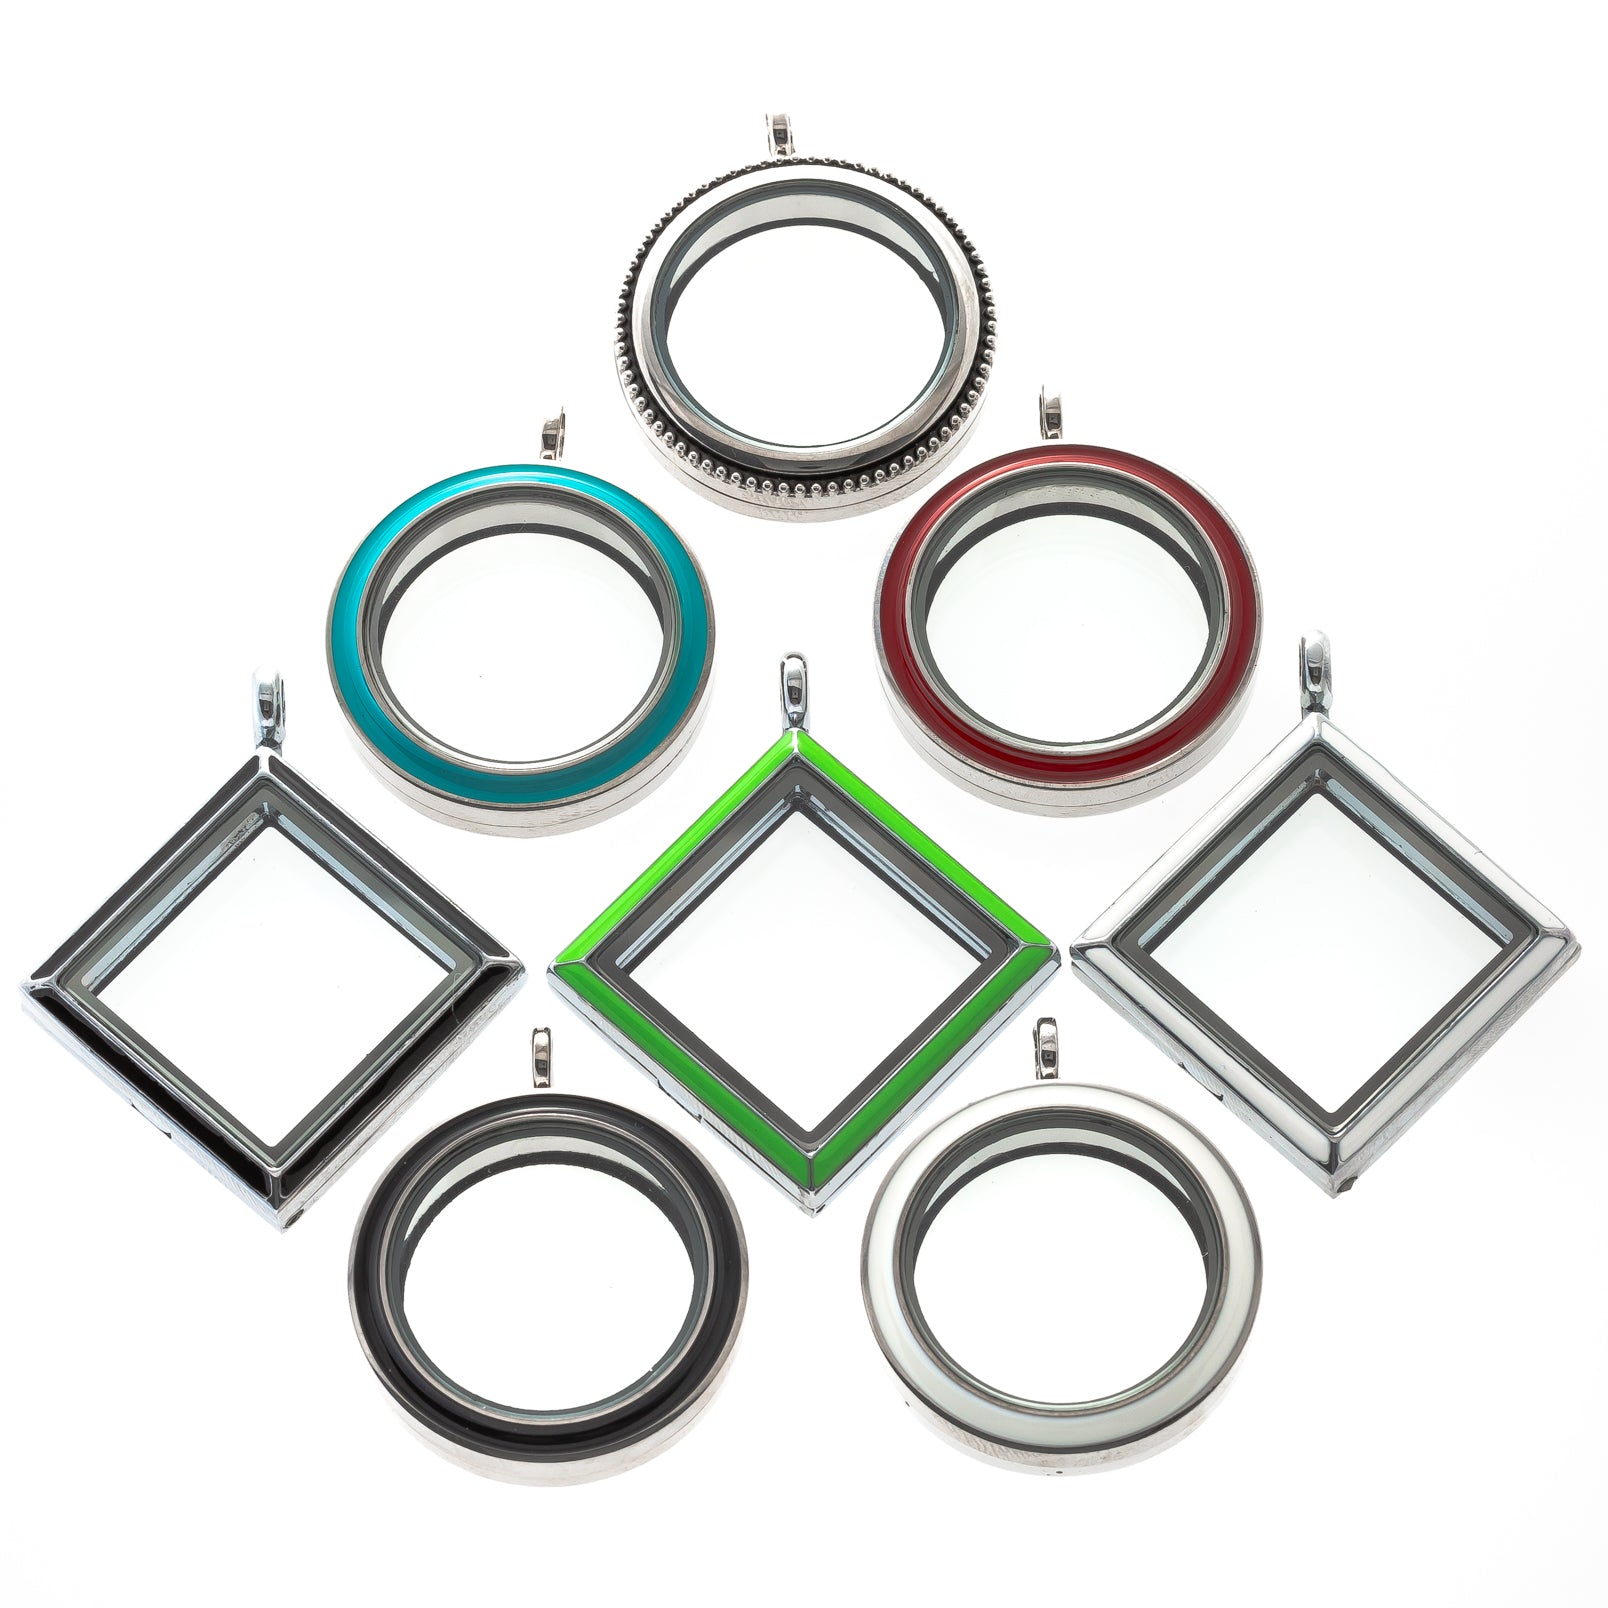 Glass Locket Pendant Magnetic - 8 Pack Variety